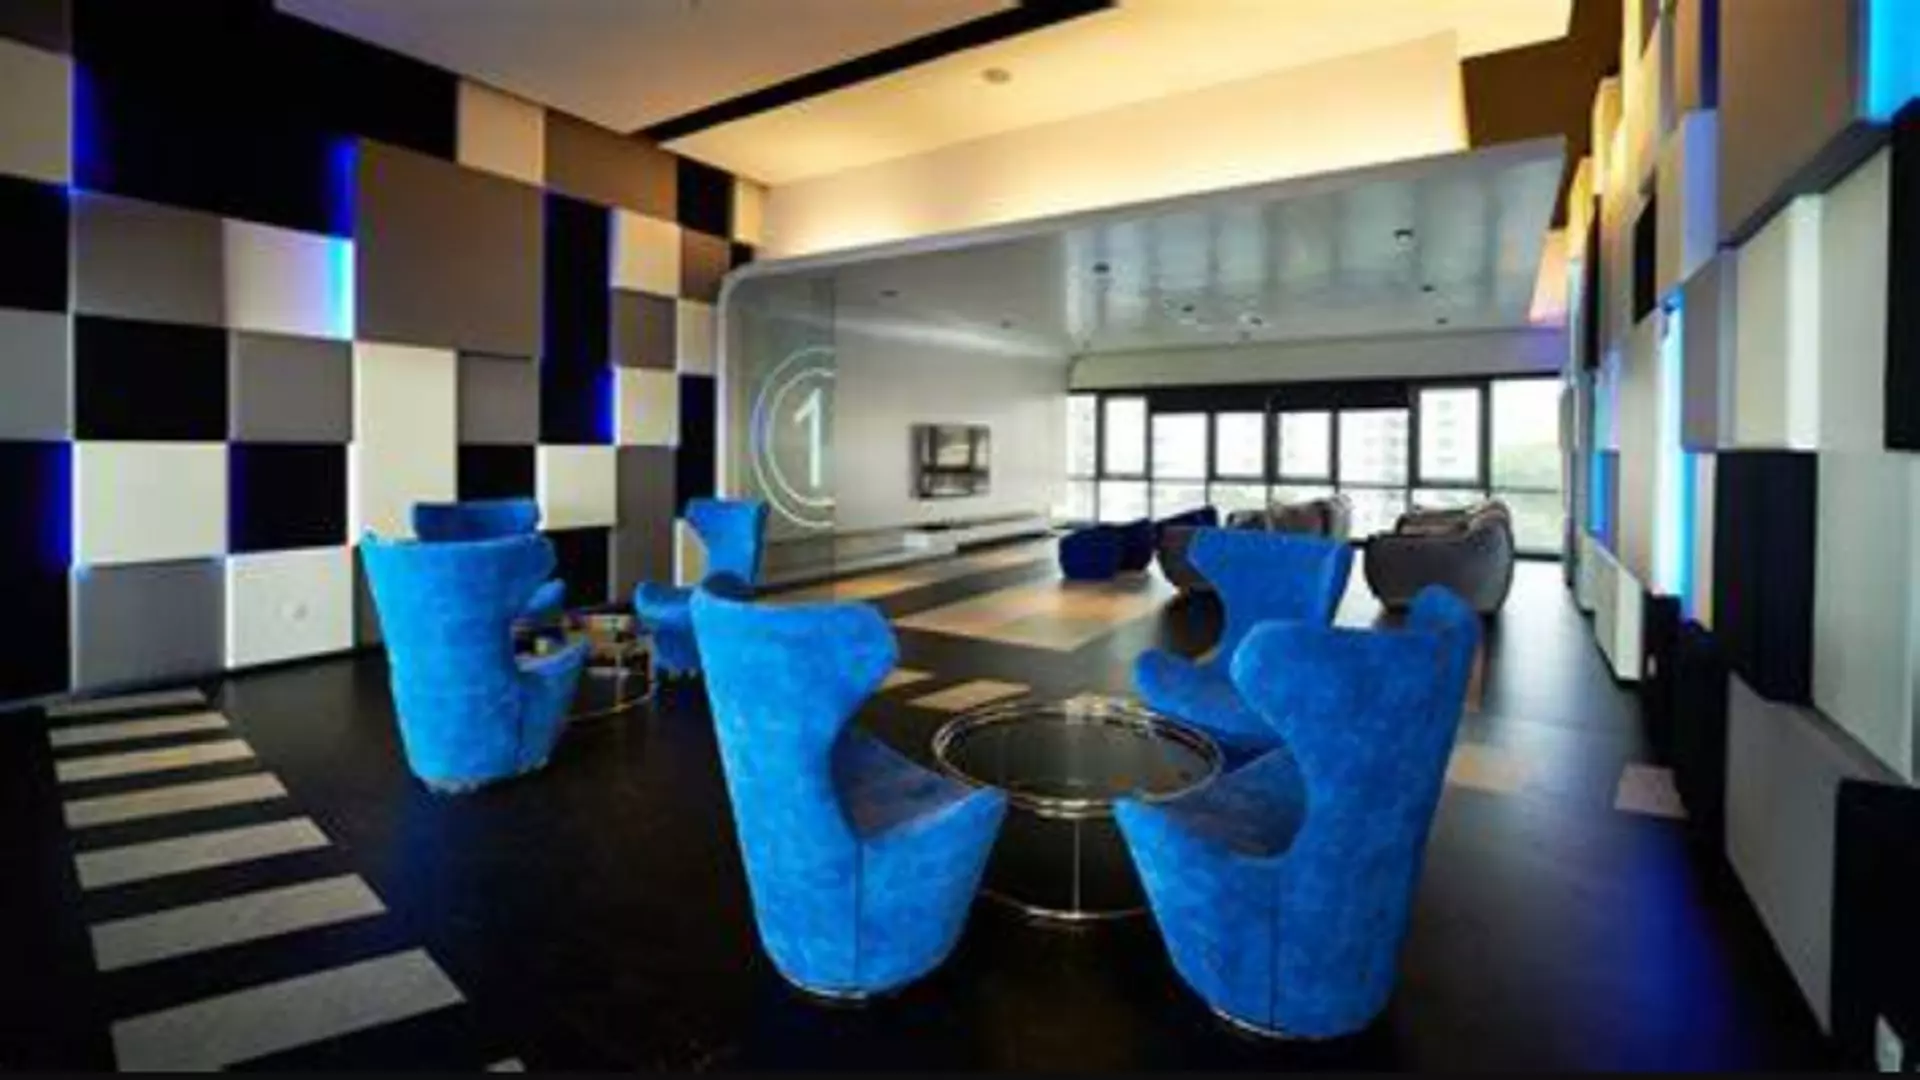 Bank Lelong Service Apartment @ The Elements Residence, Ampang, Kuala Lumpur for Auction 4